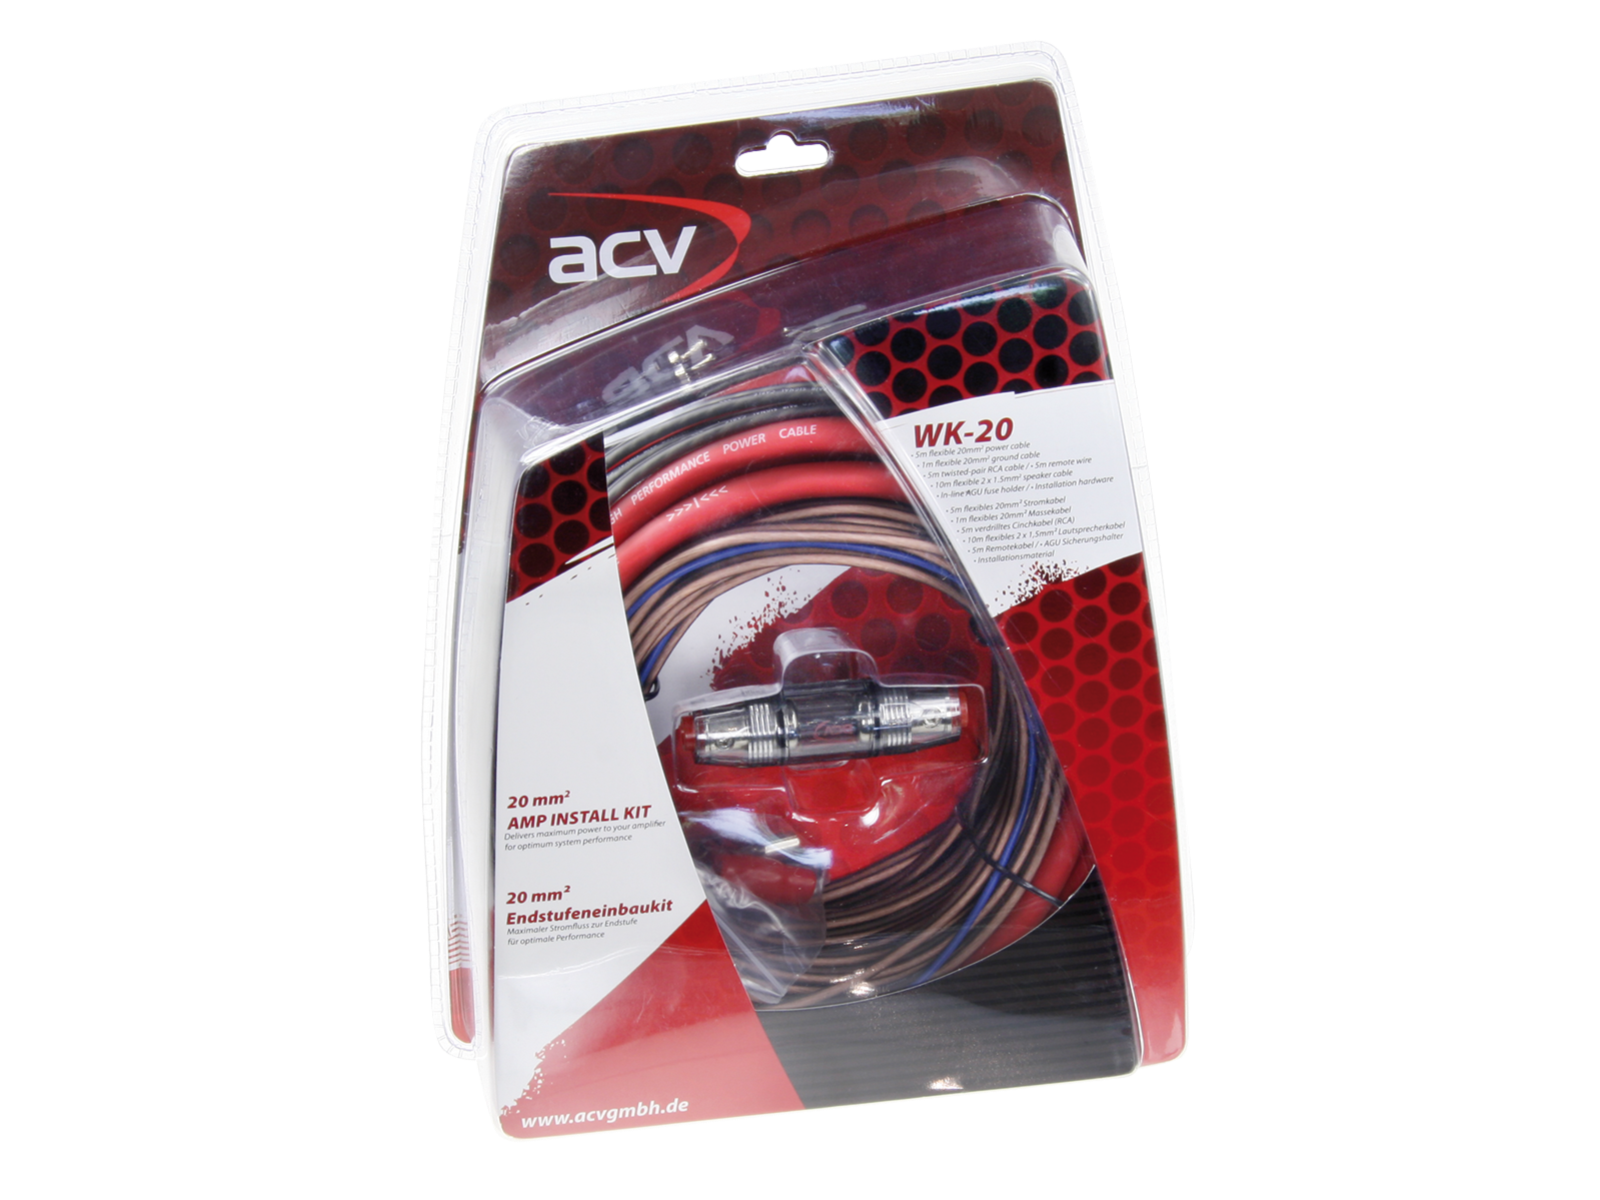 ACV WK-20 Endstufen Einbaukit Kabel Kit Endstufe Stromkabel 20mm² Lautsprecherkabel 2,5mm²